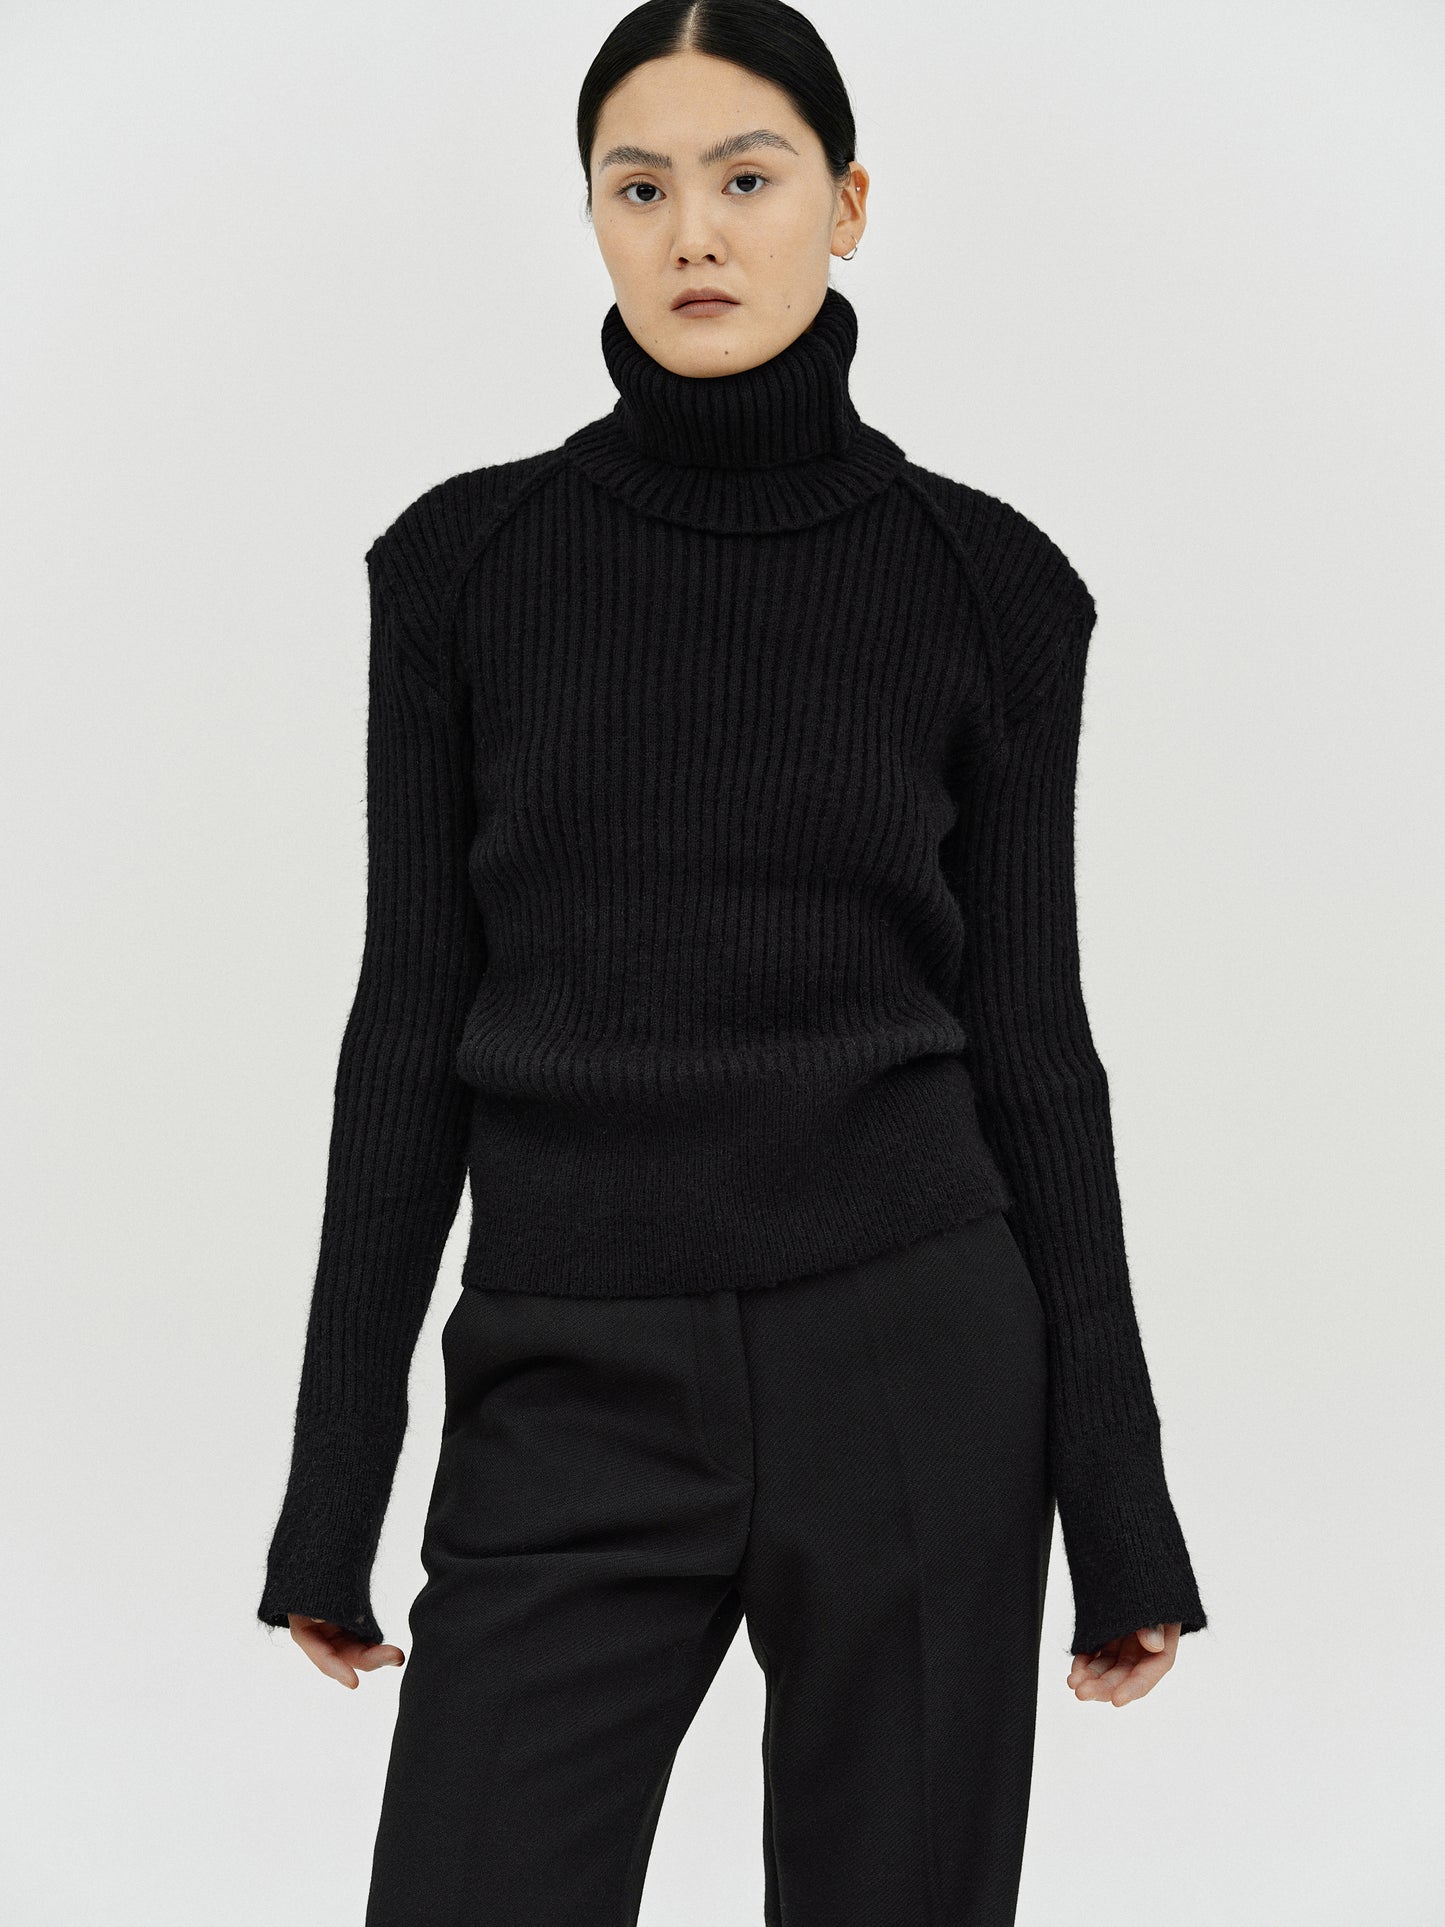 Neck Warmer Sweater Set, Black